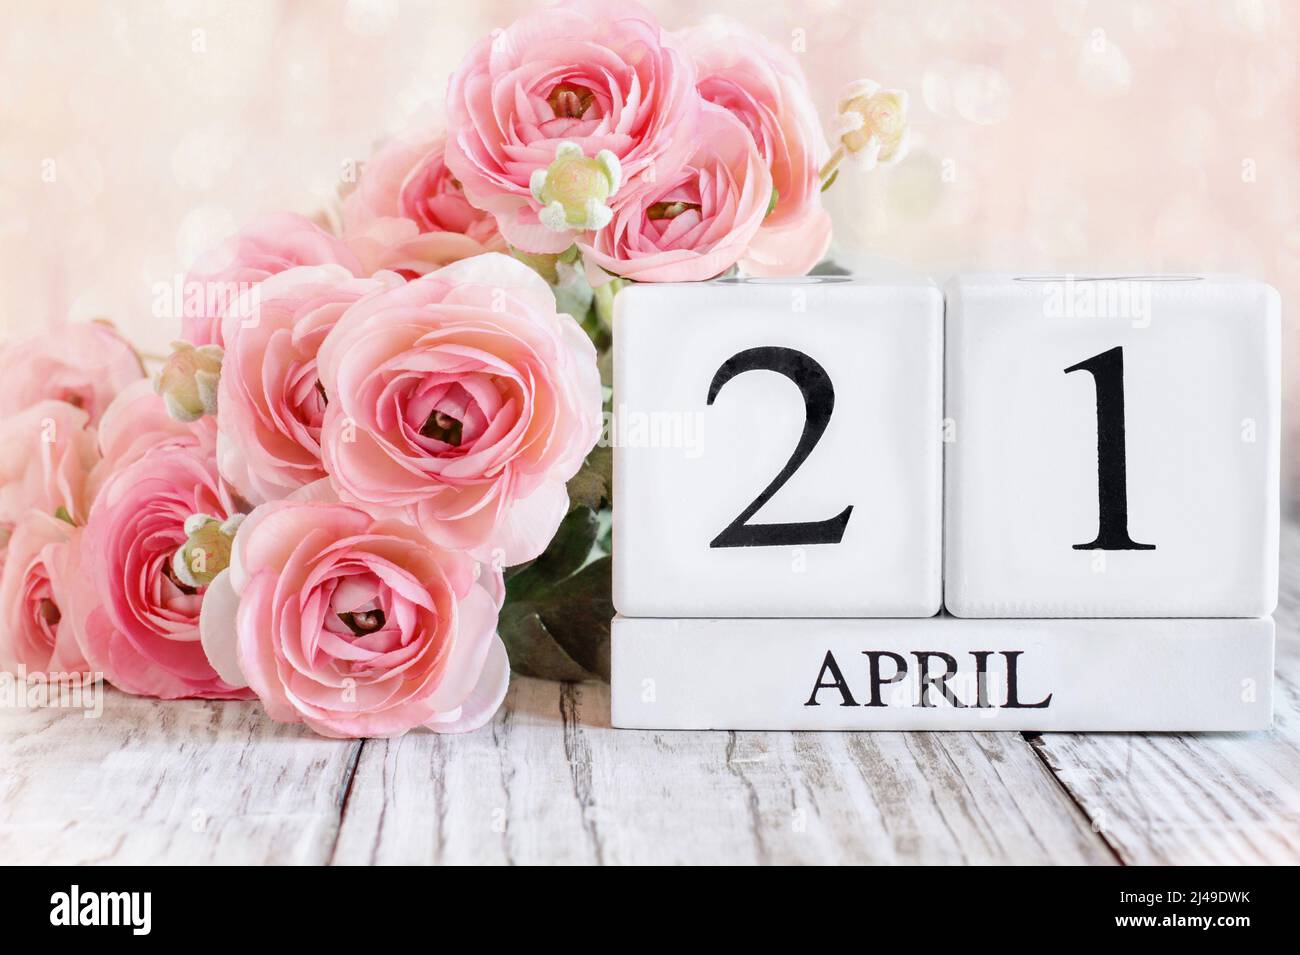 Bloques de calendario de madera blanca con fecha del 21st de abril. Enfoque selectivo con fondo borroso. Foto de stock